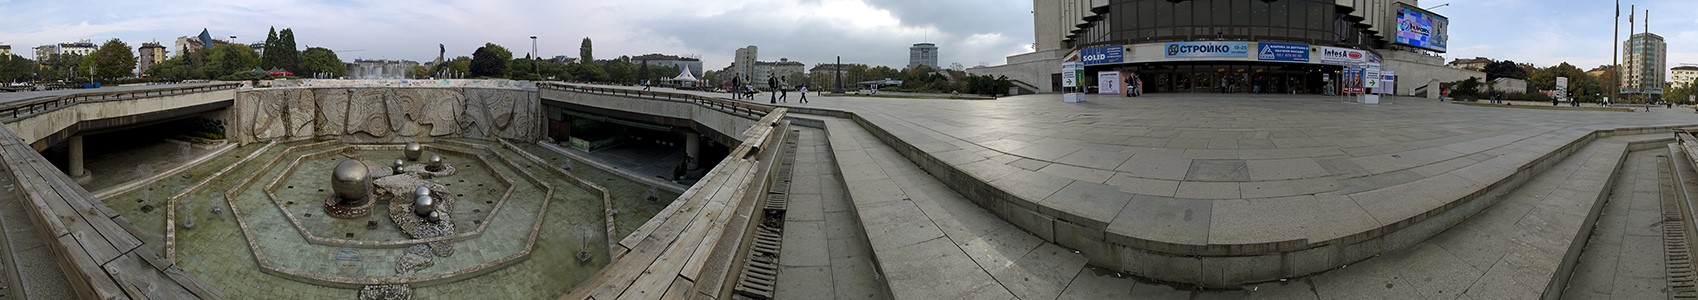 Bulgarienplatz und Nationaler Kulturpalast (NDK) Sofia